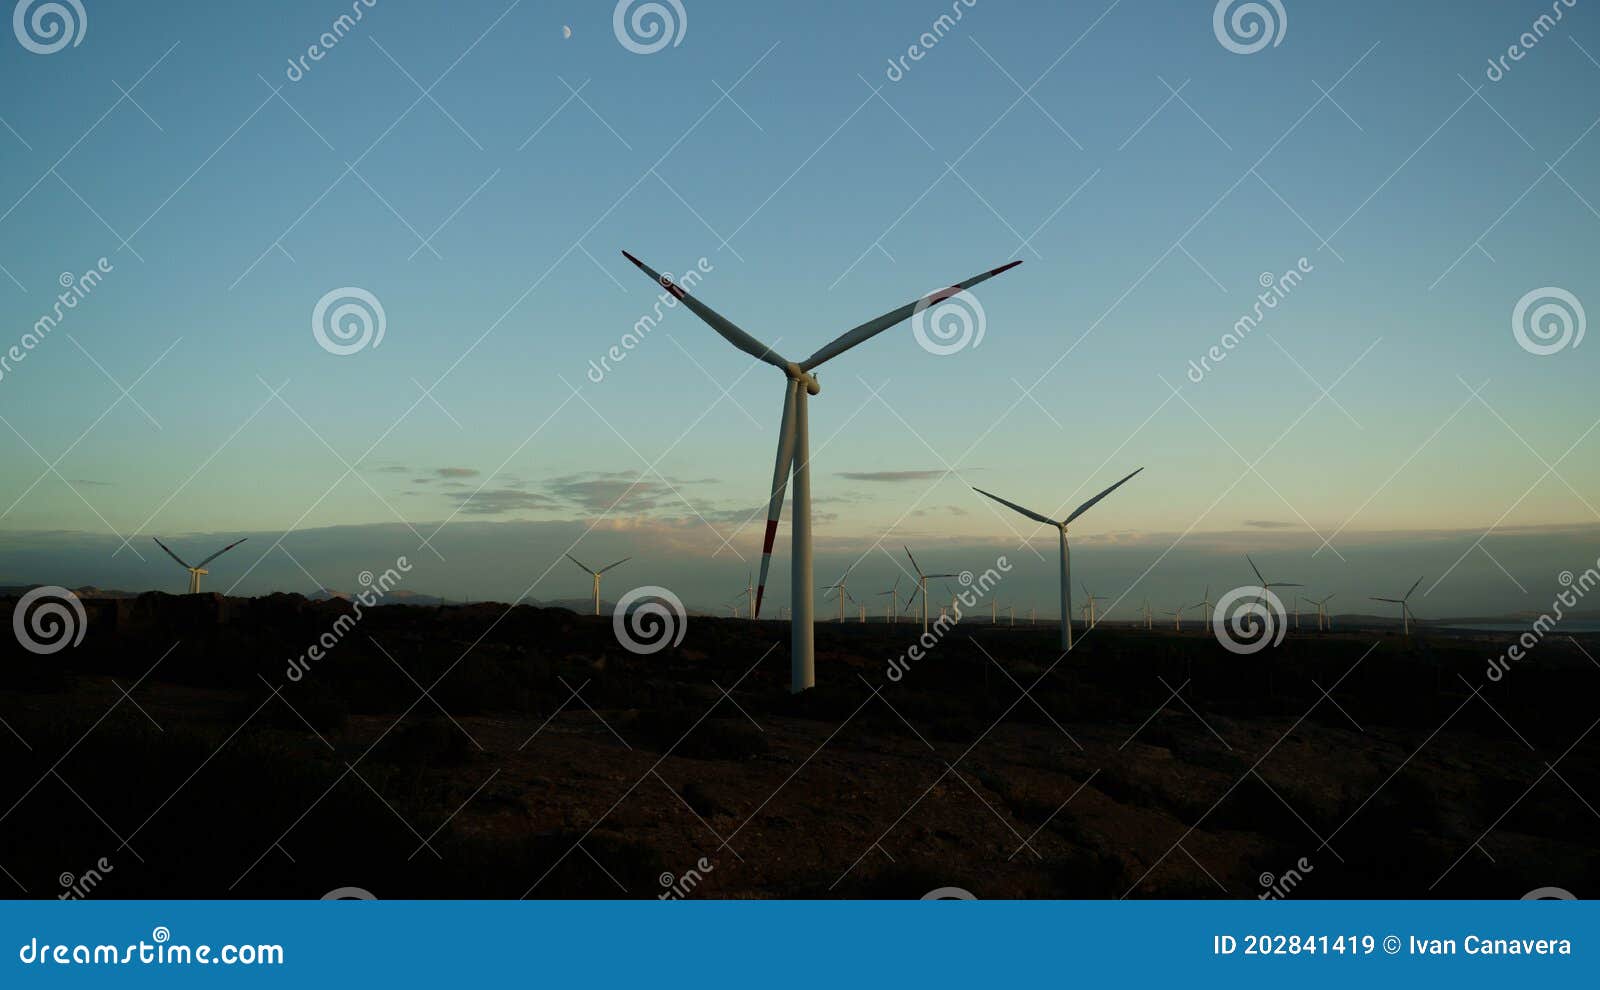 wind turbine with beautiful blue sky, portoscuso,south sardinia